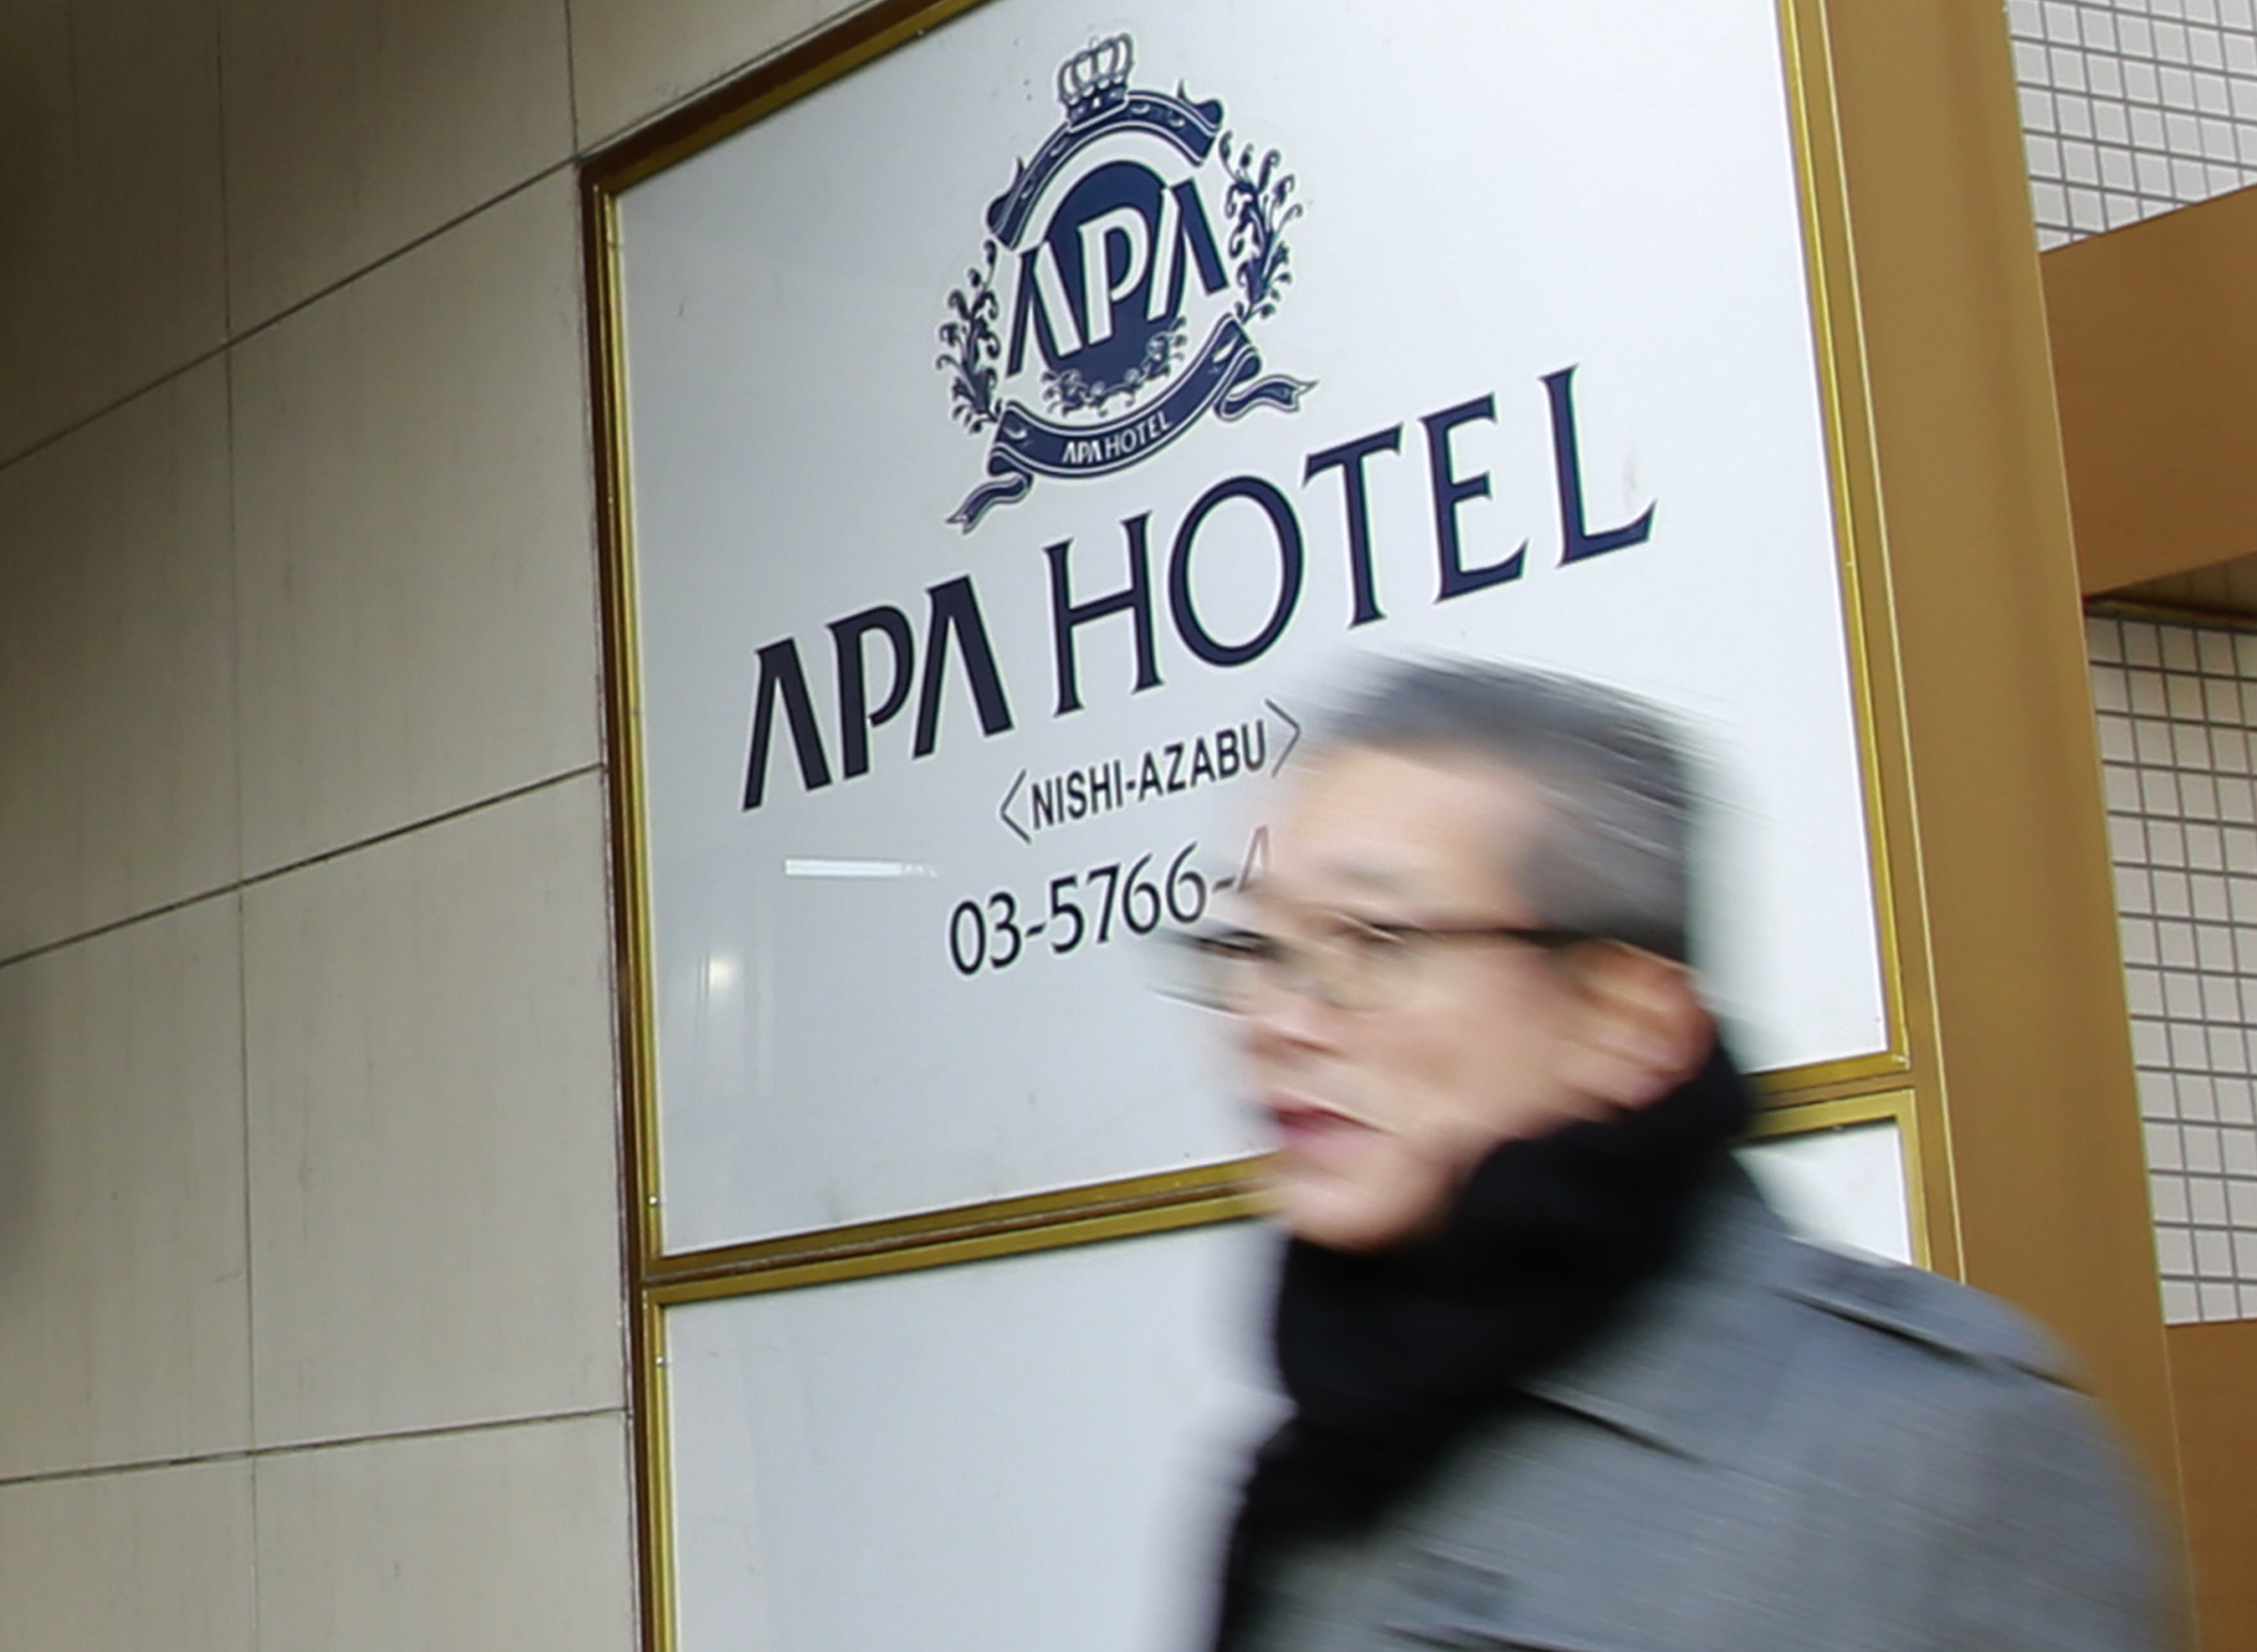 APDespite calls for boycott, Apa hotel